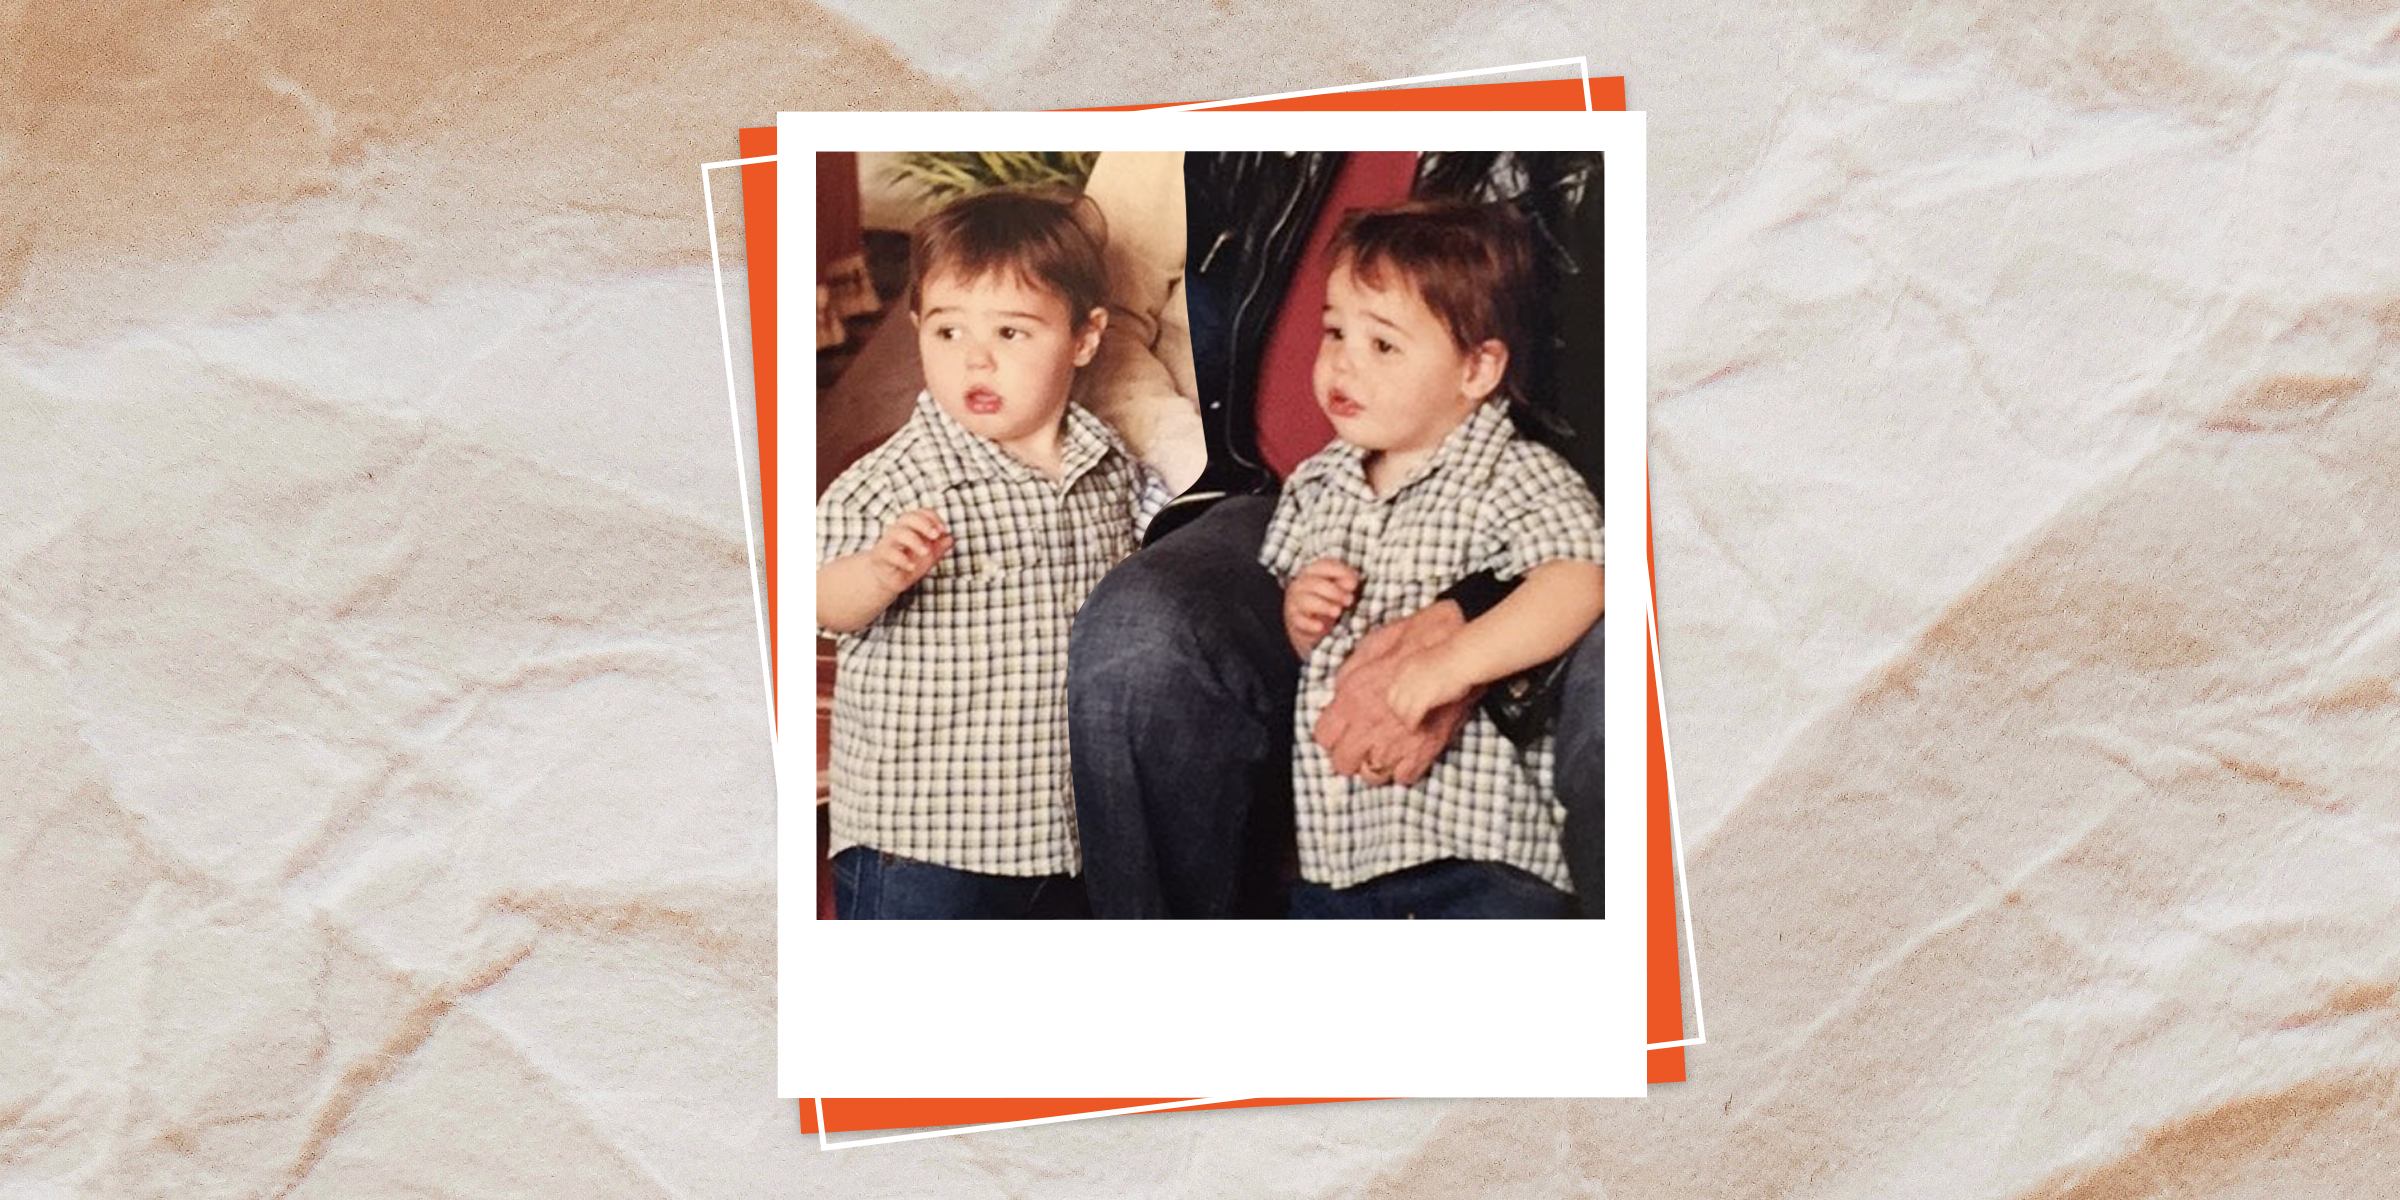 The famous star's twin boys, 2017 | Source: Instagram.com/wandamillerrogers